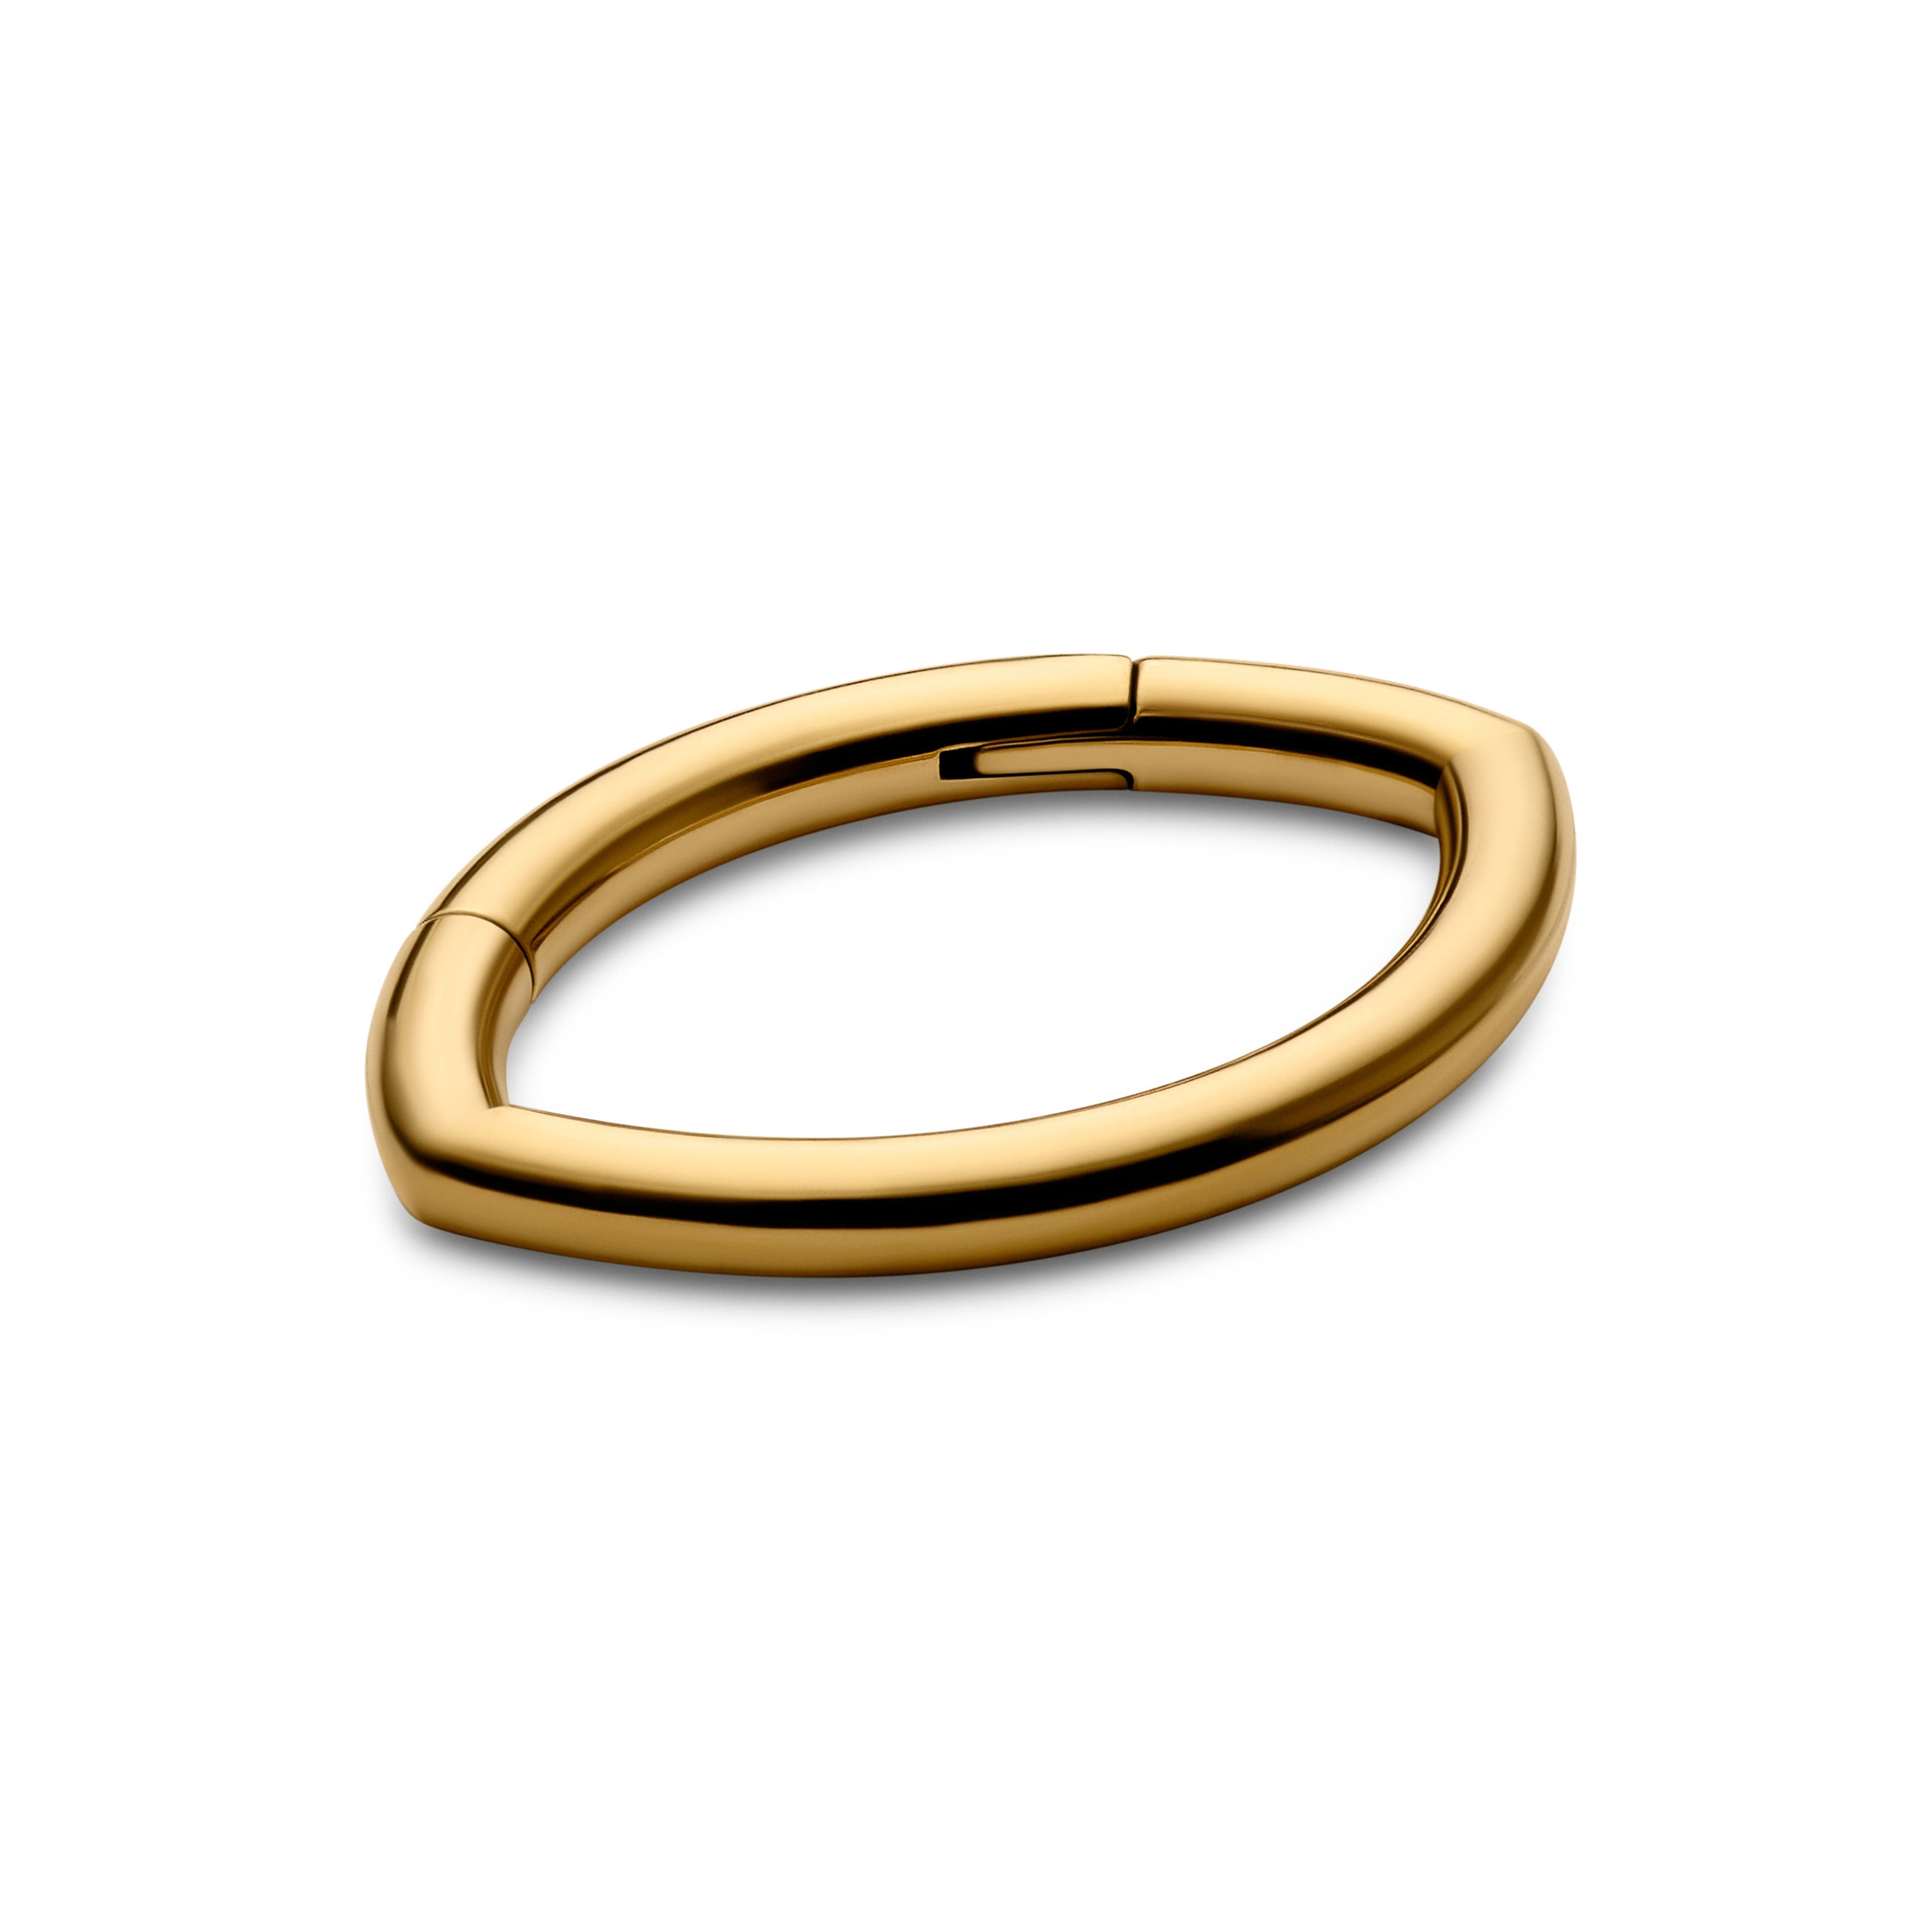 8 mm Gold-Tone Titanium Oval Piercing Ring